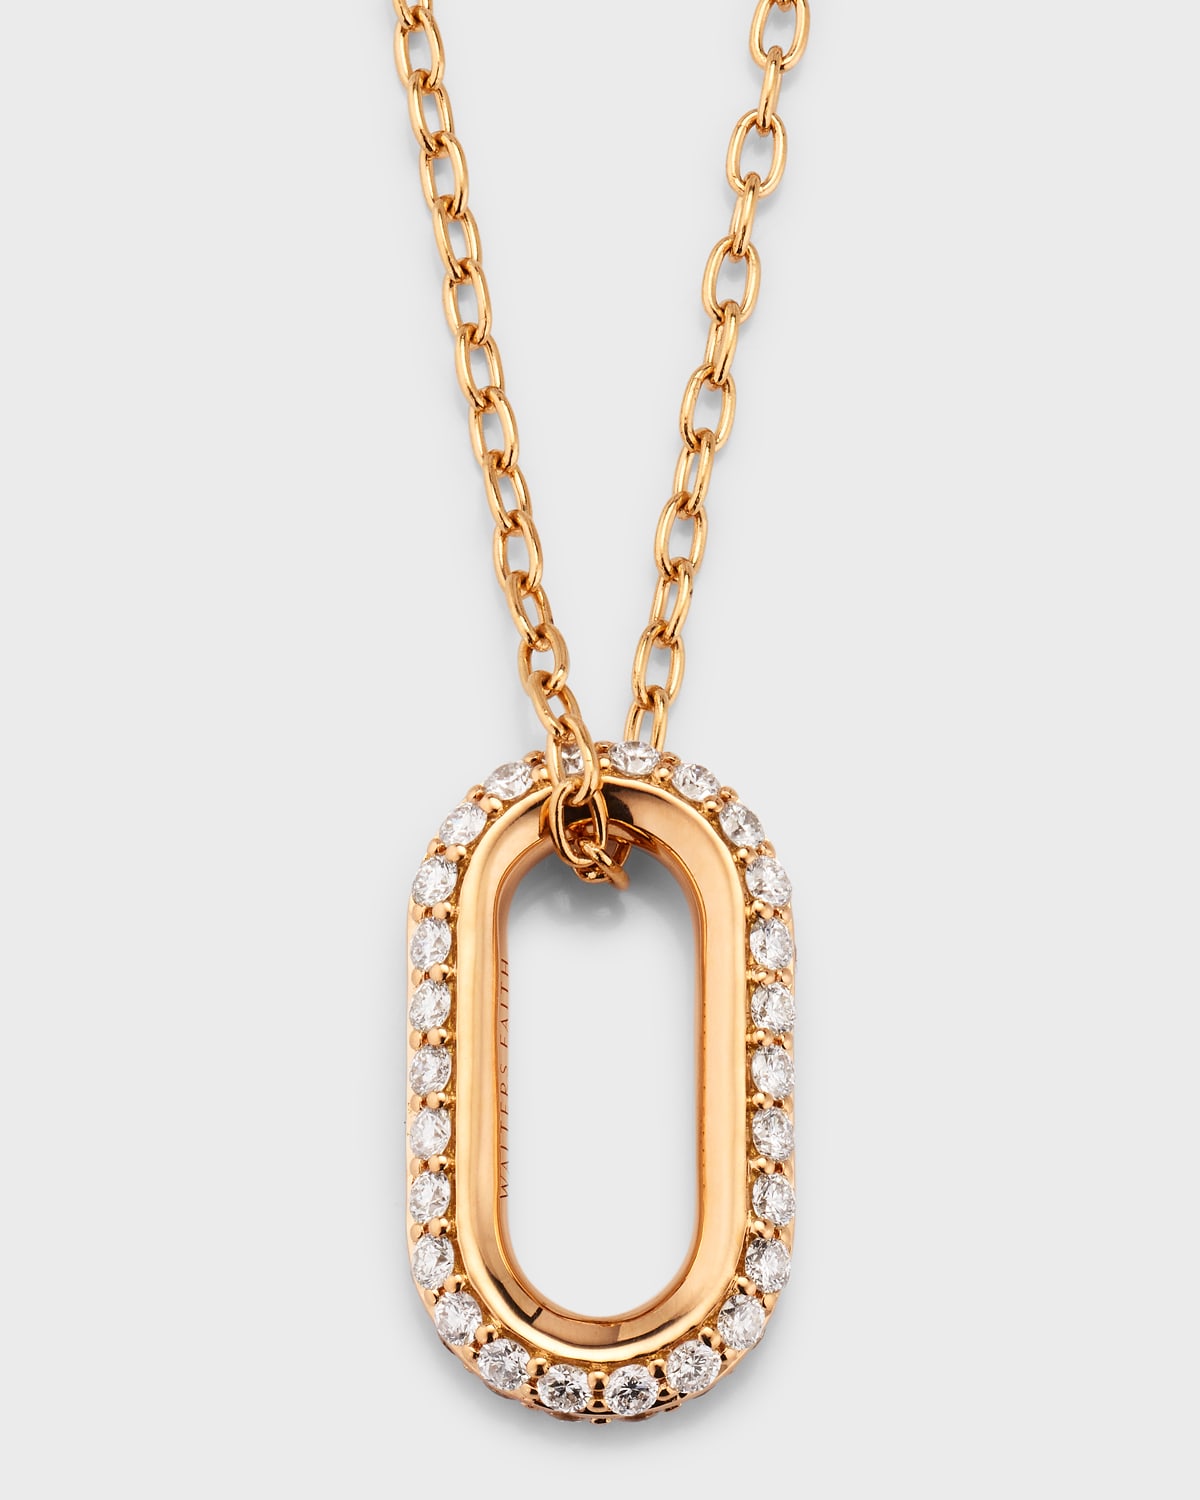 Saxon 18K Rose Gold Diamond Link on Chain Necklace, 24"L